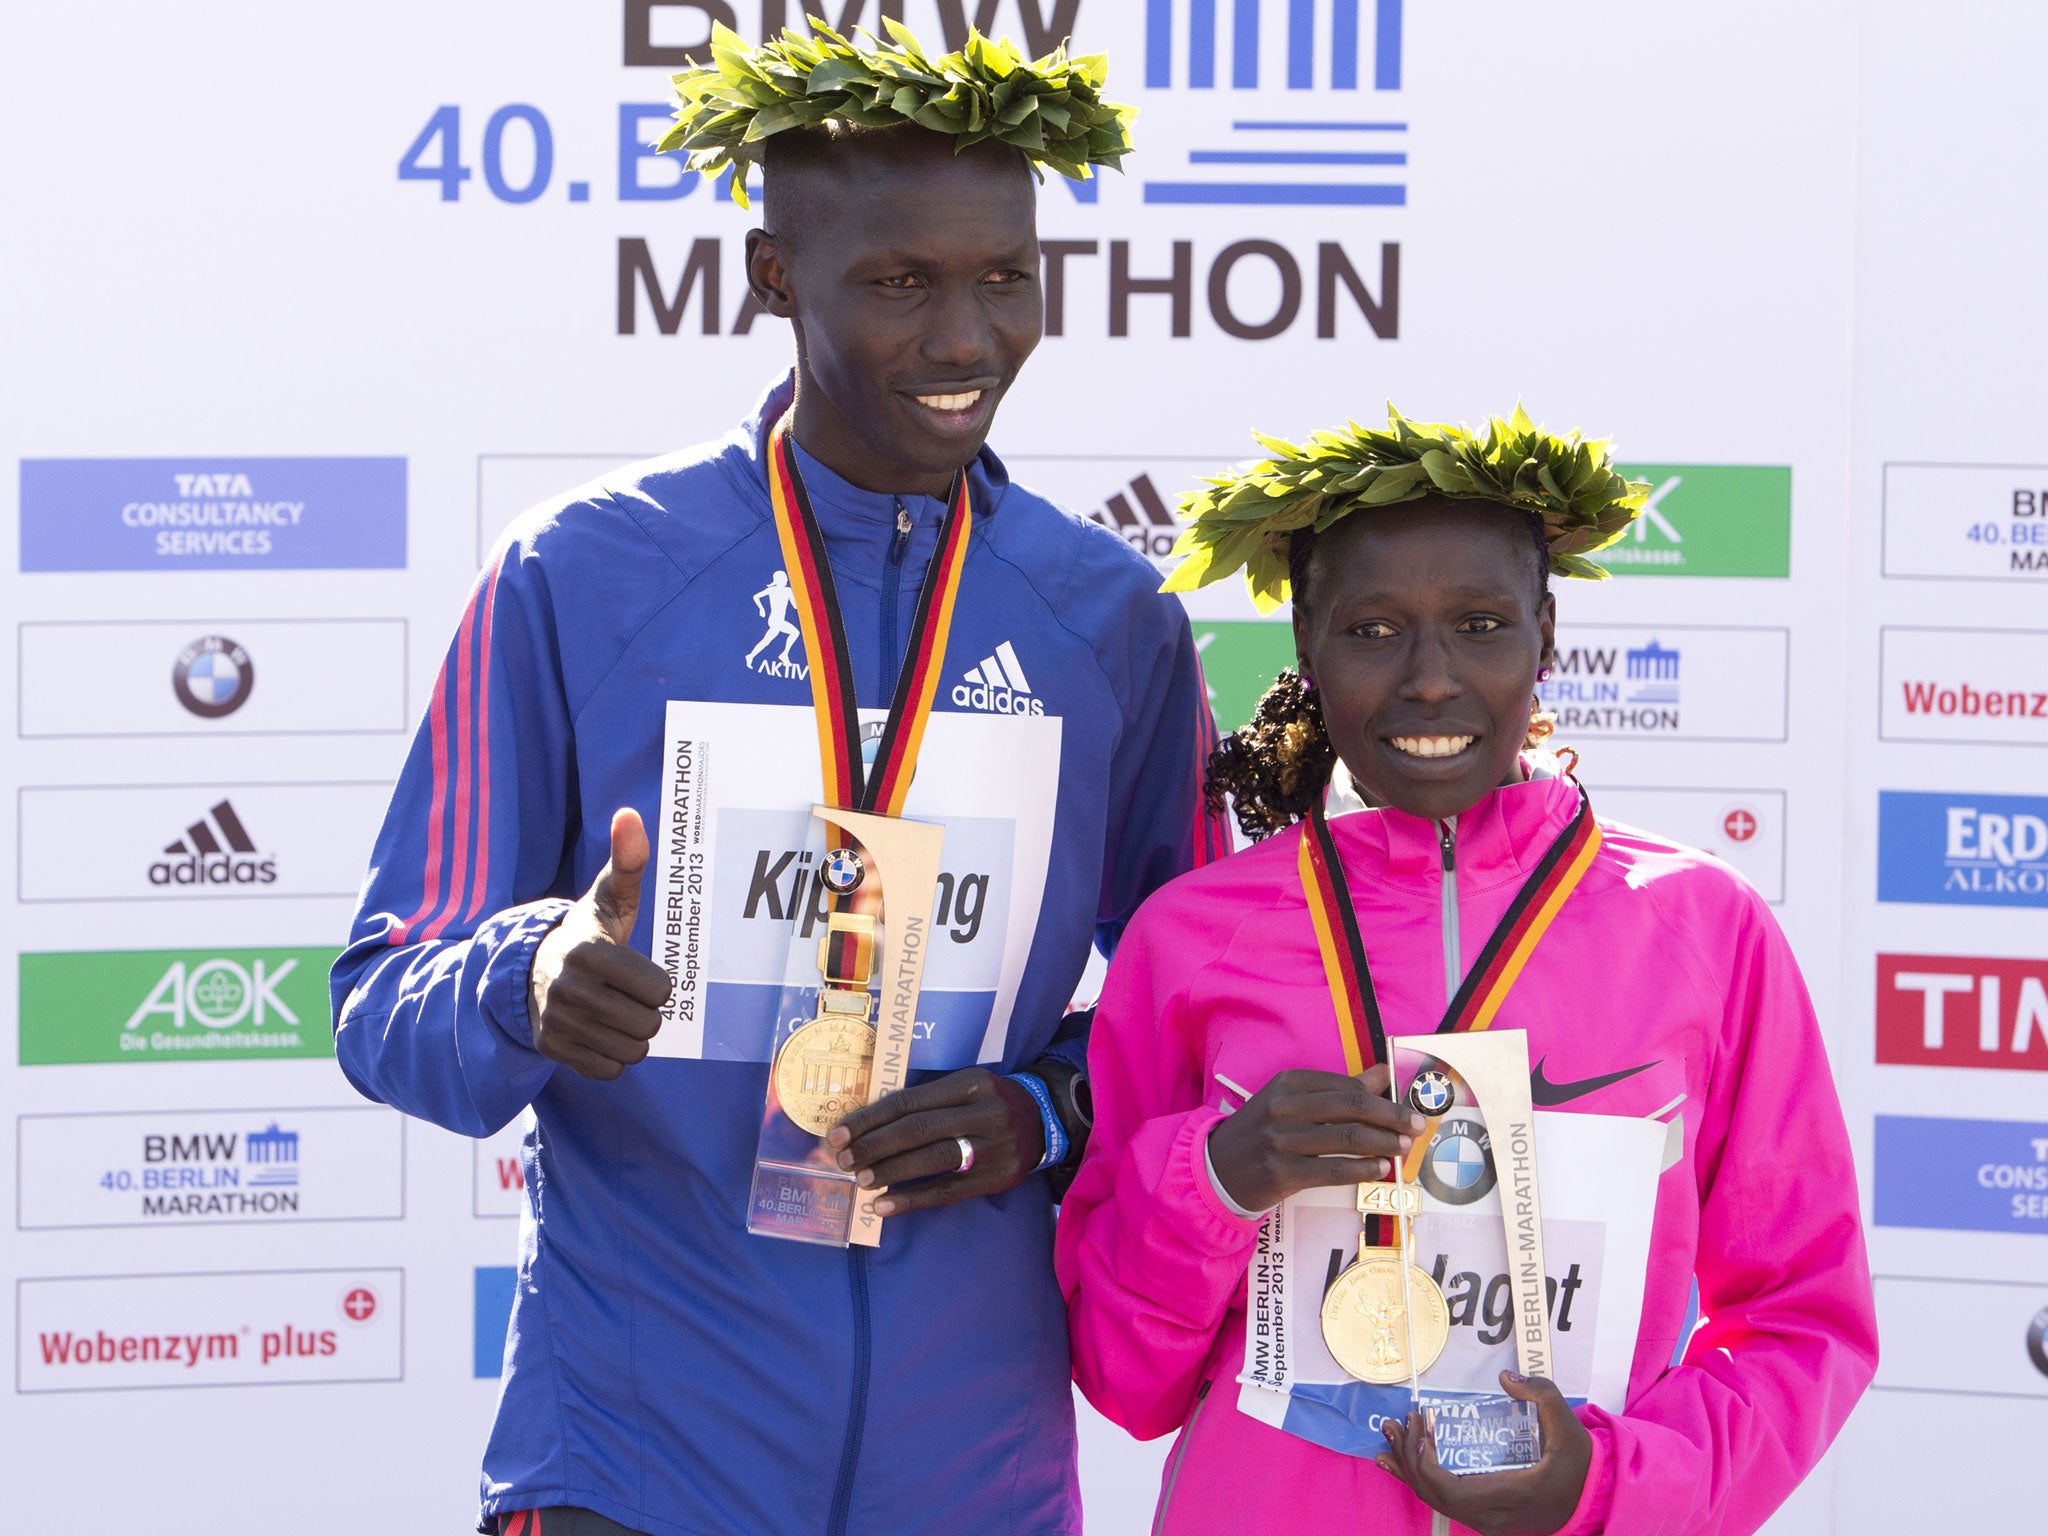 London Marathon winners Wilson Kipsang (left) and Florence Kiplagat (right), both from Kenya, pose on the podium